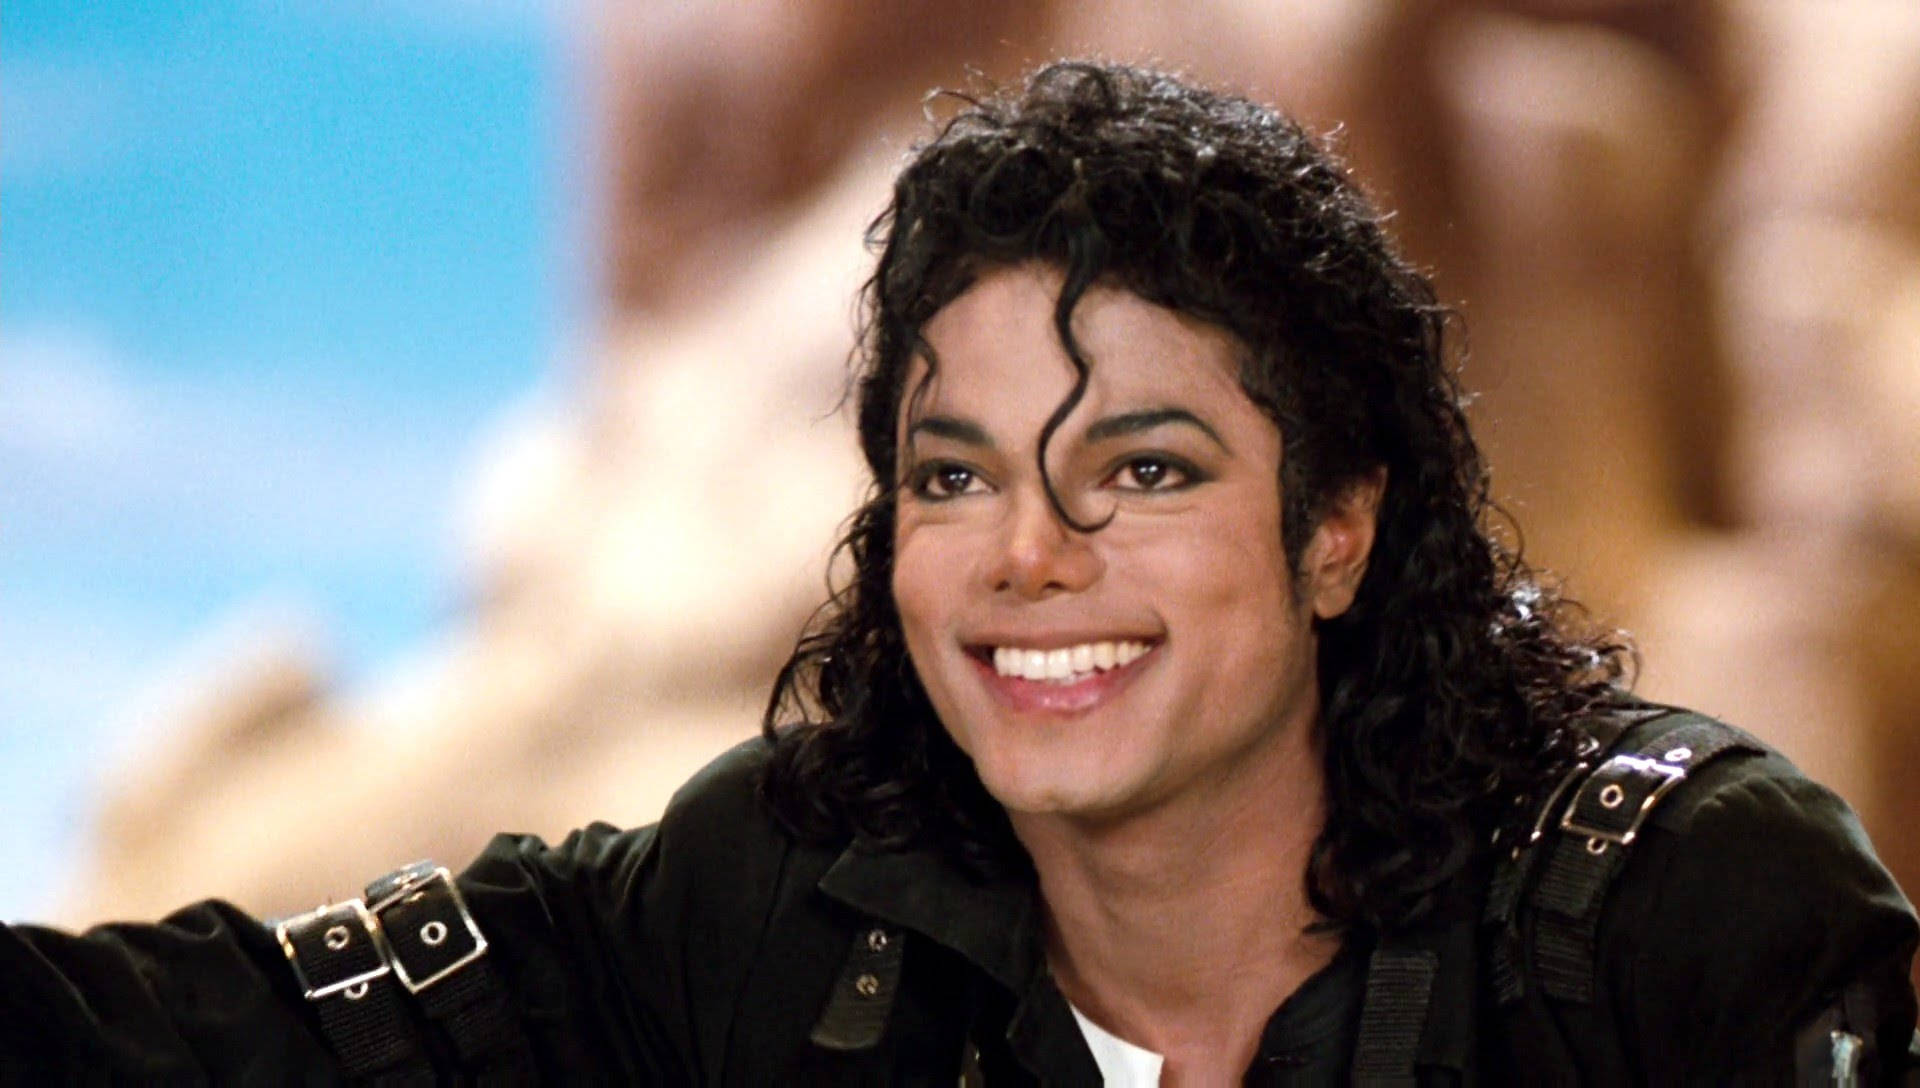 Michael Jackson Smile